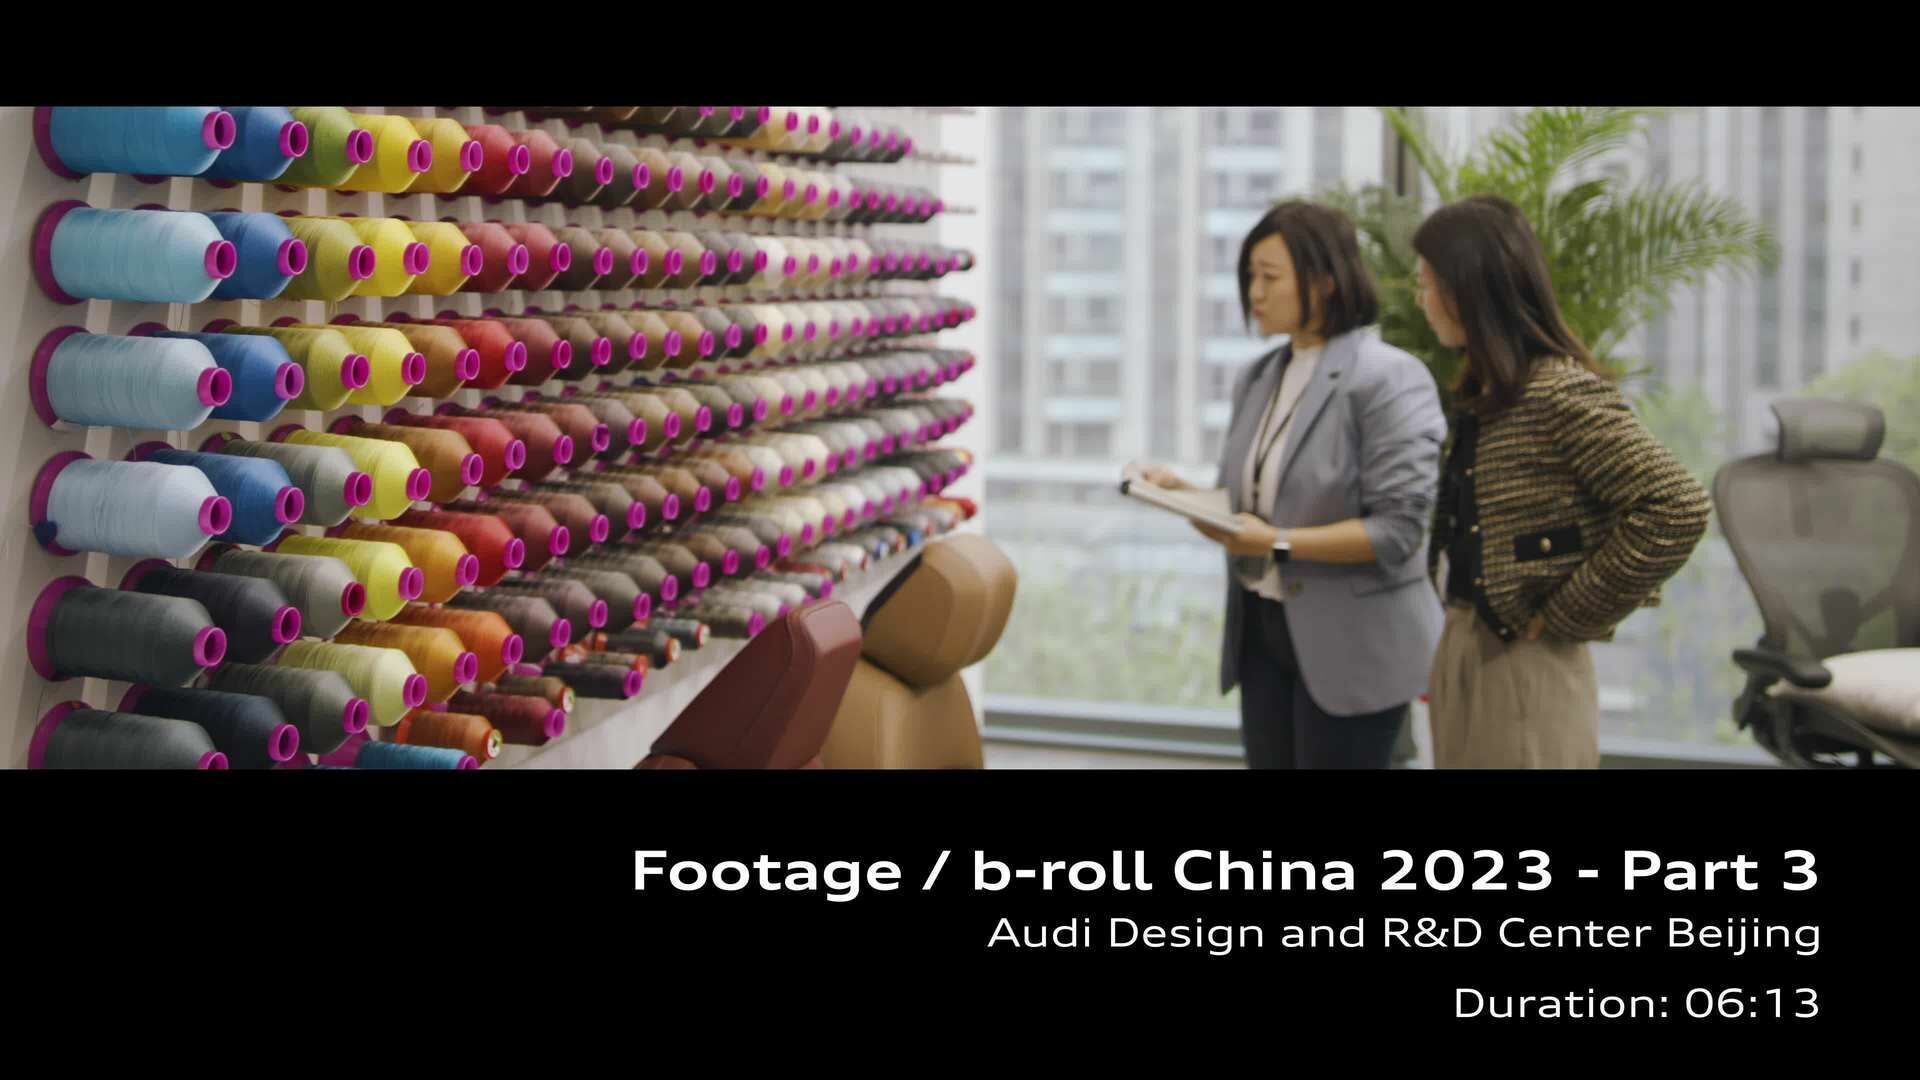 Footage: Auto Shanghai 2023 – Audi Design and R&D Center Beijing